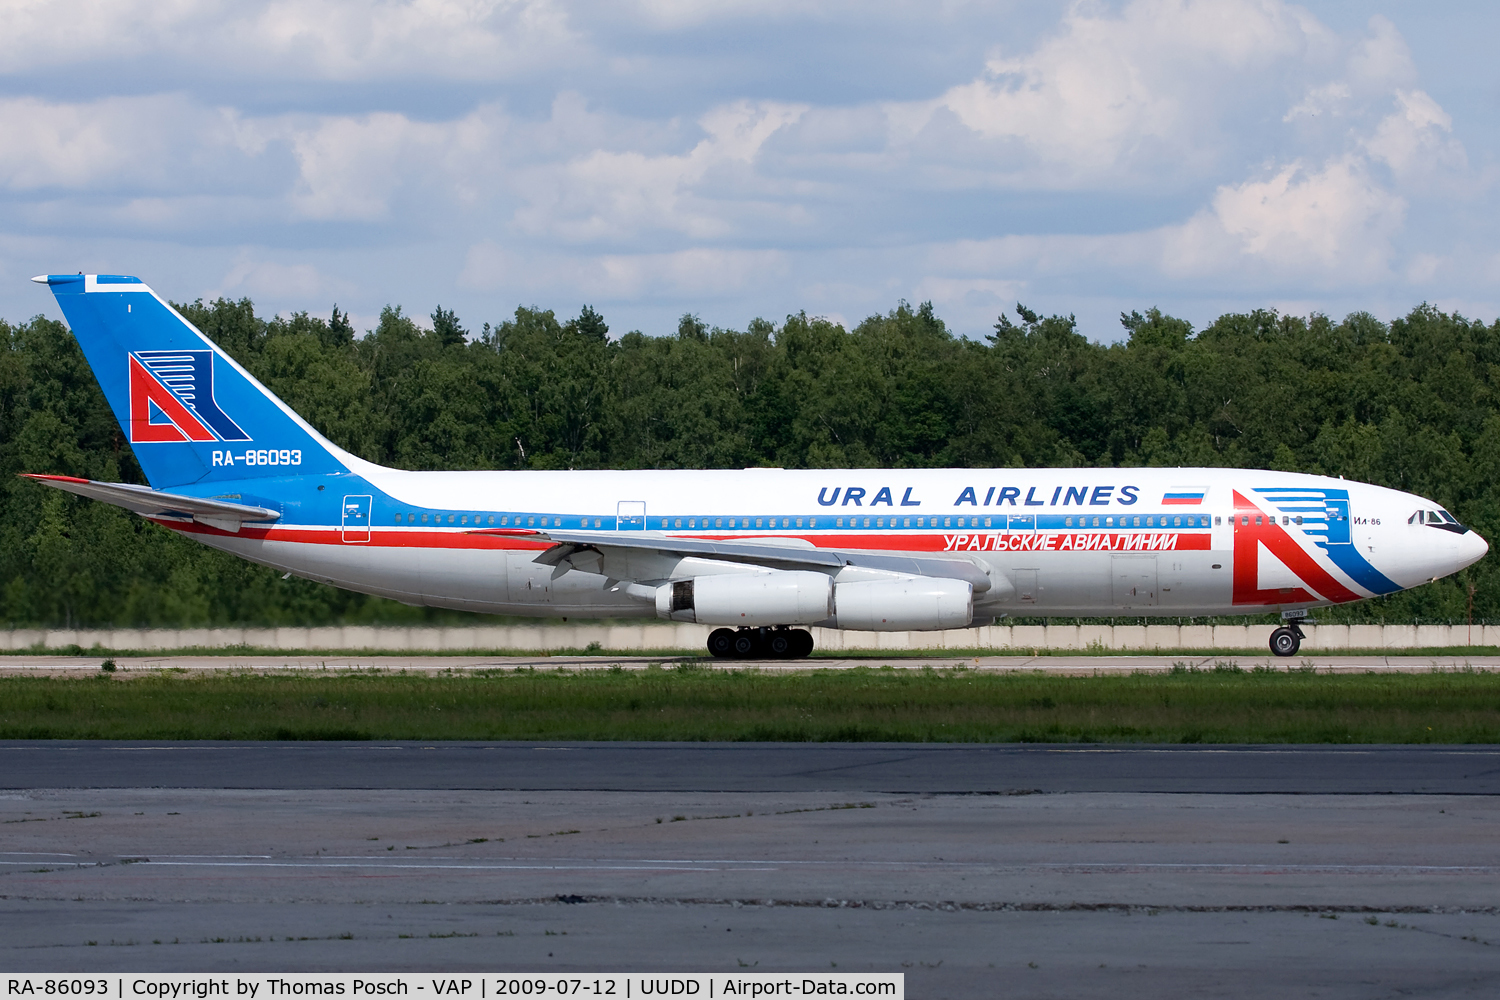 RA-86093, 1987 Ilyushin Il-86 C/N 51483207064, Ural Airlines